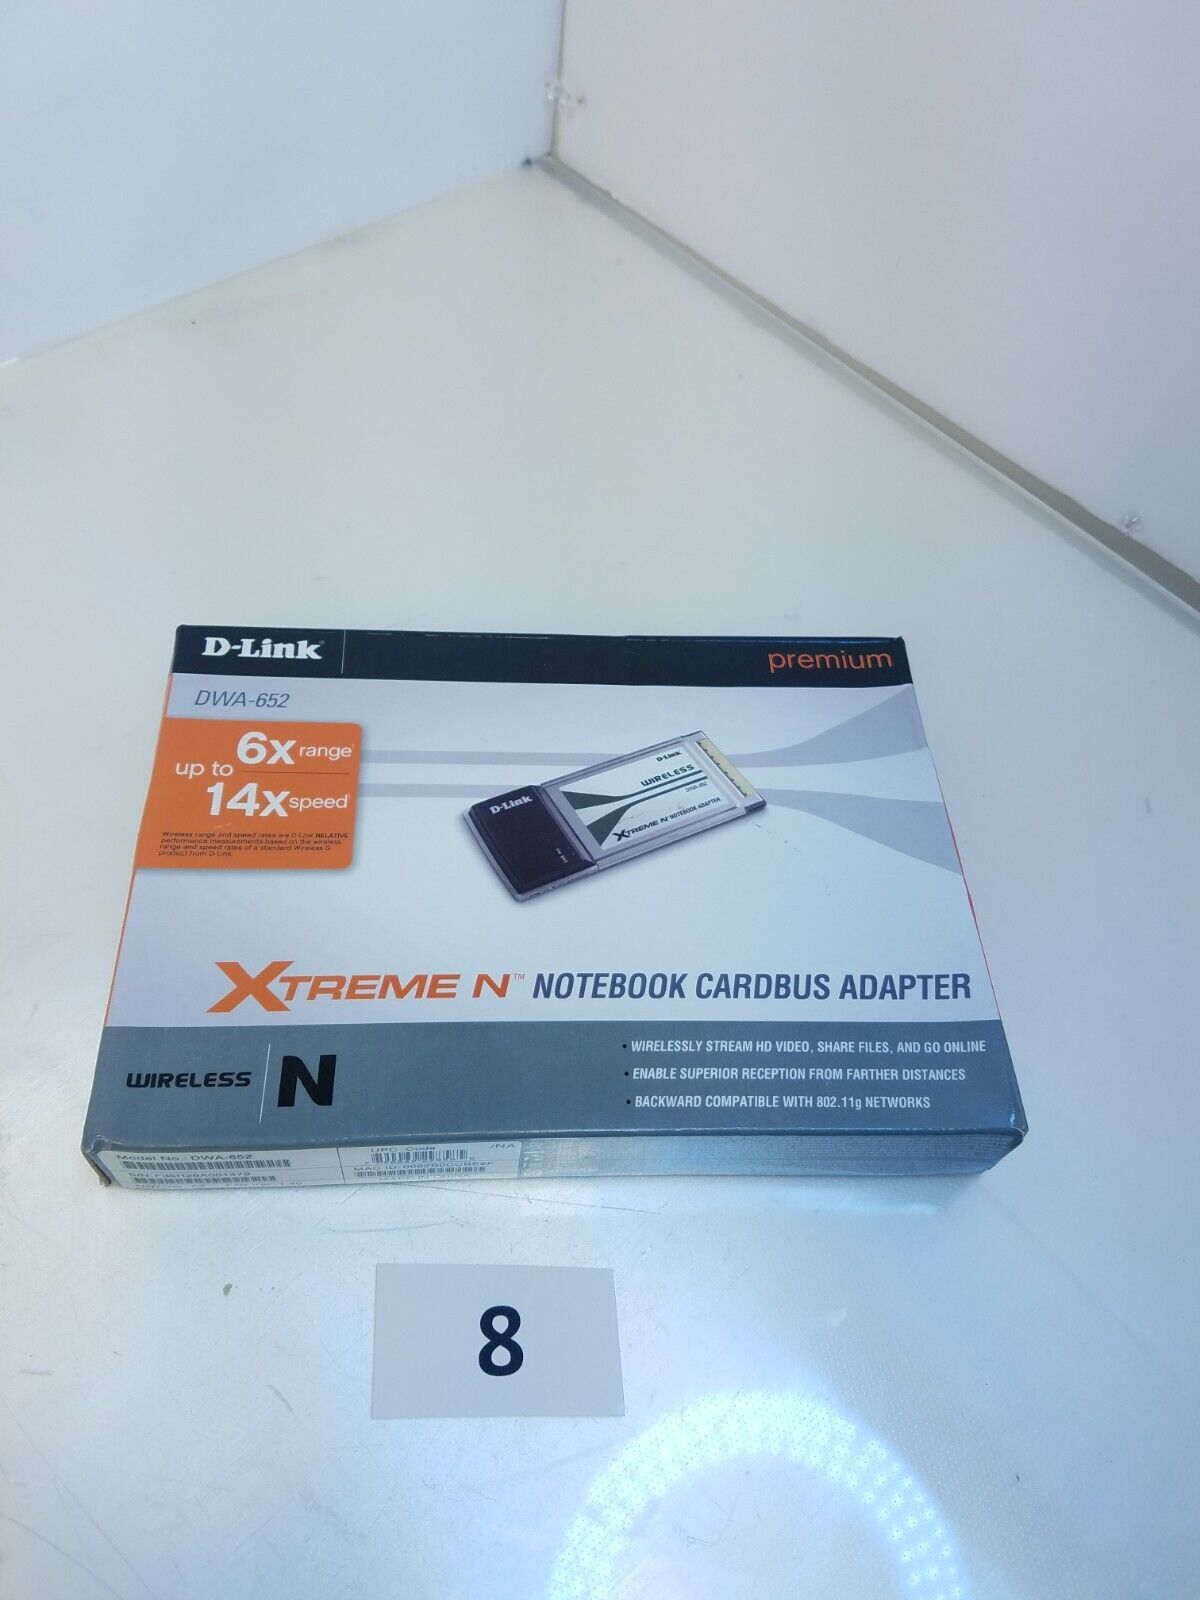 D-Link Premium DWA-652 Xtreme N Notebook Adapter UpTo 6x Range 14x Speed Wireles